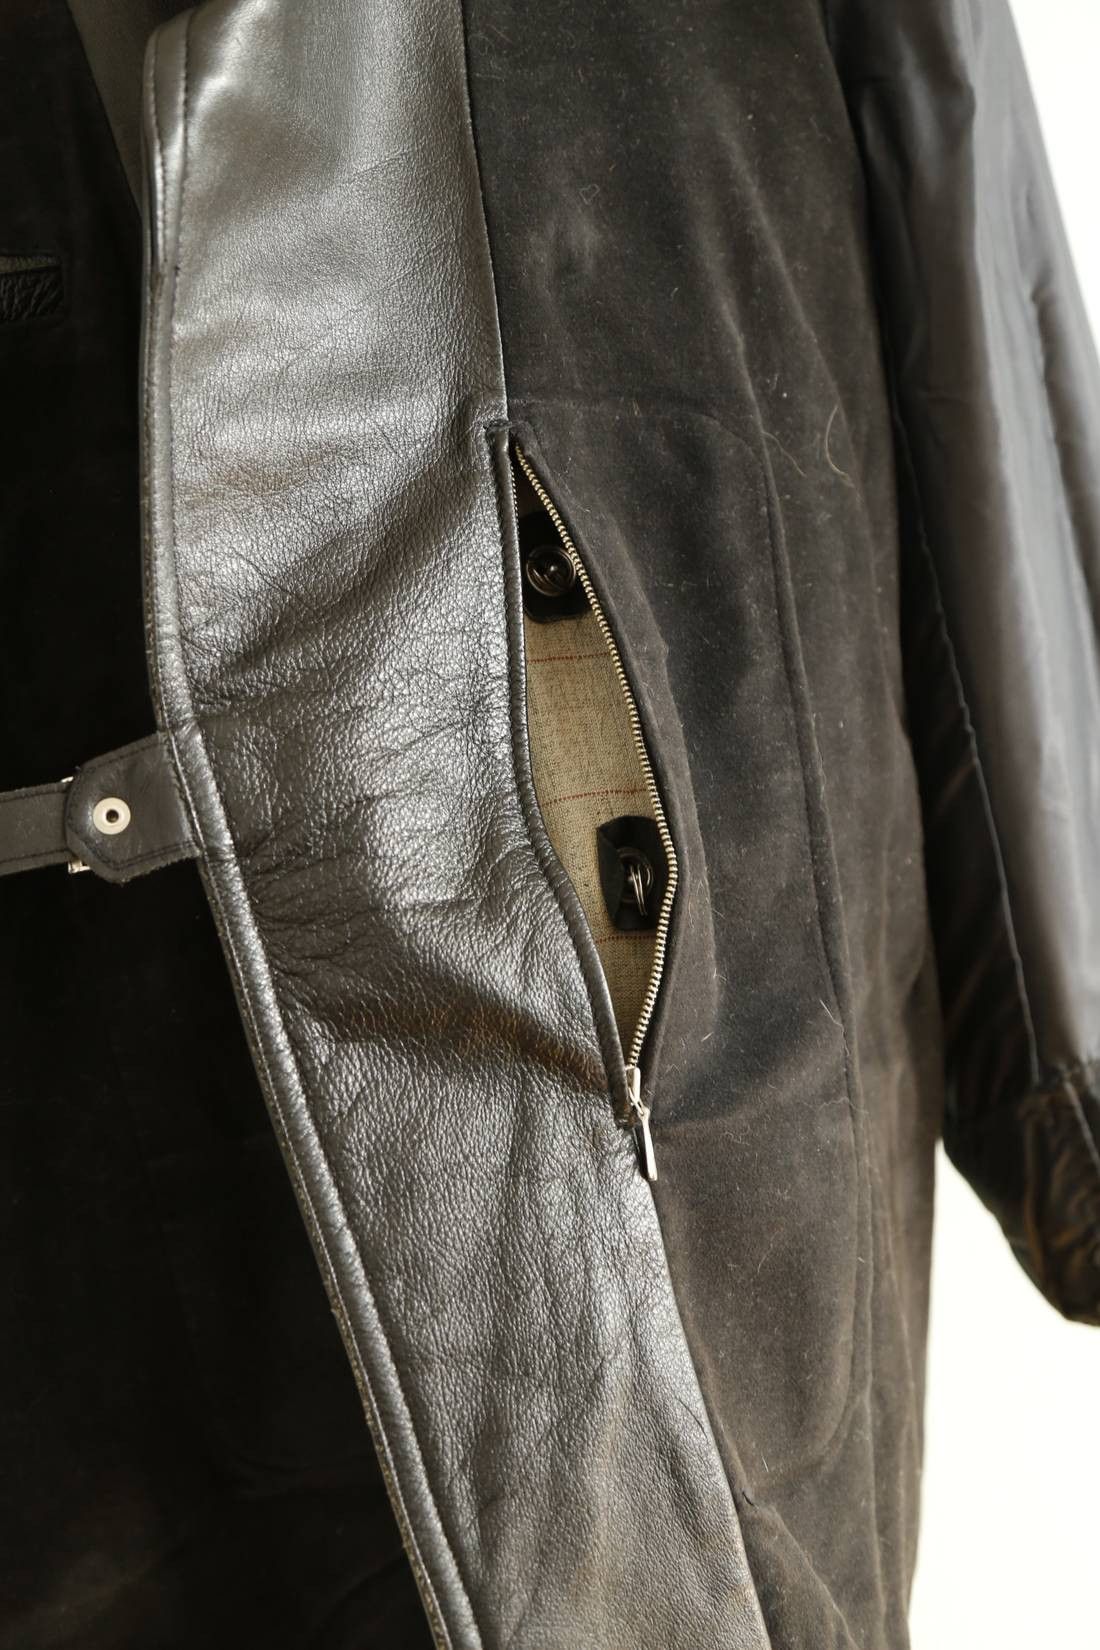 Vintage 38R Double breasted leather jacket german military car coat rain jacket barkstormer motorcycle Size US M / EU 48-50 / 2 - 4 Thumbnail